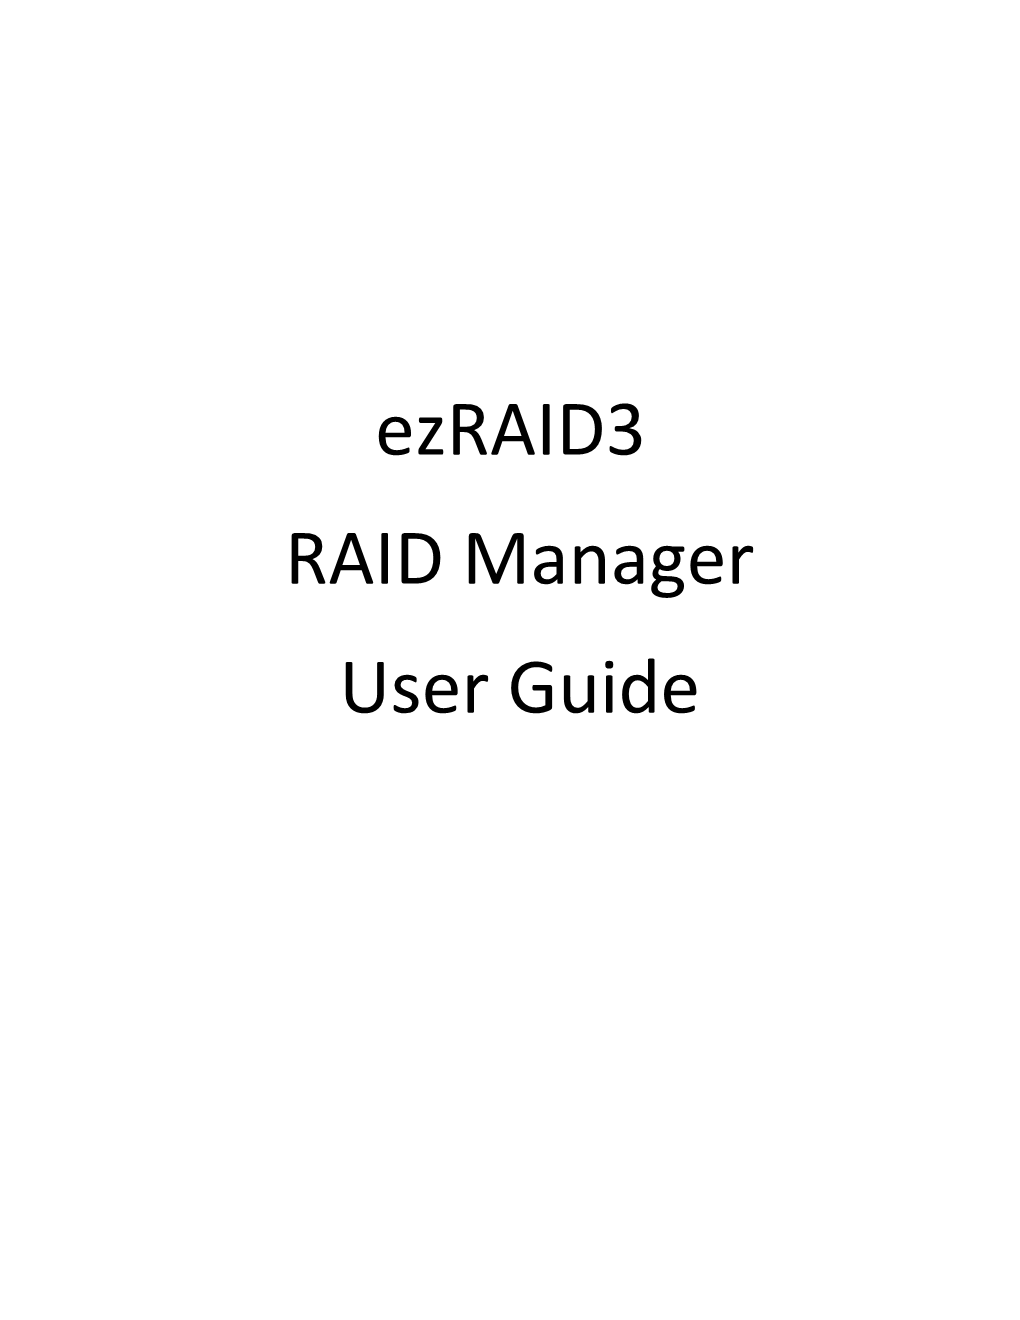 Ezraid3 RAID Manager User Guide Ezraid3 Manager GUI Version 1.0